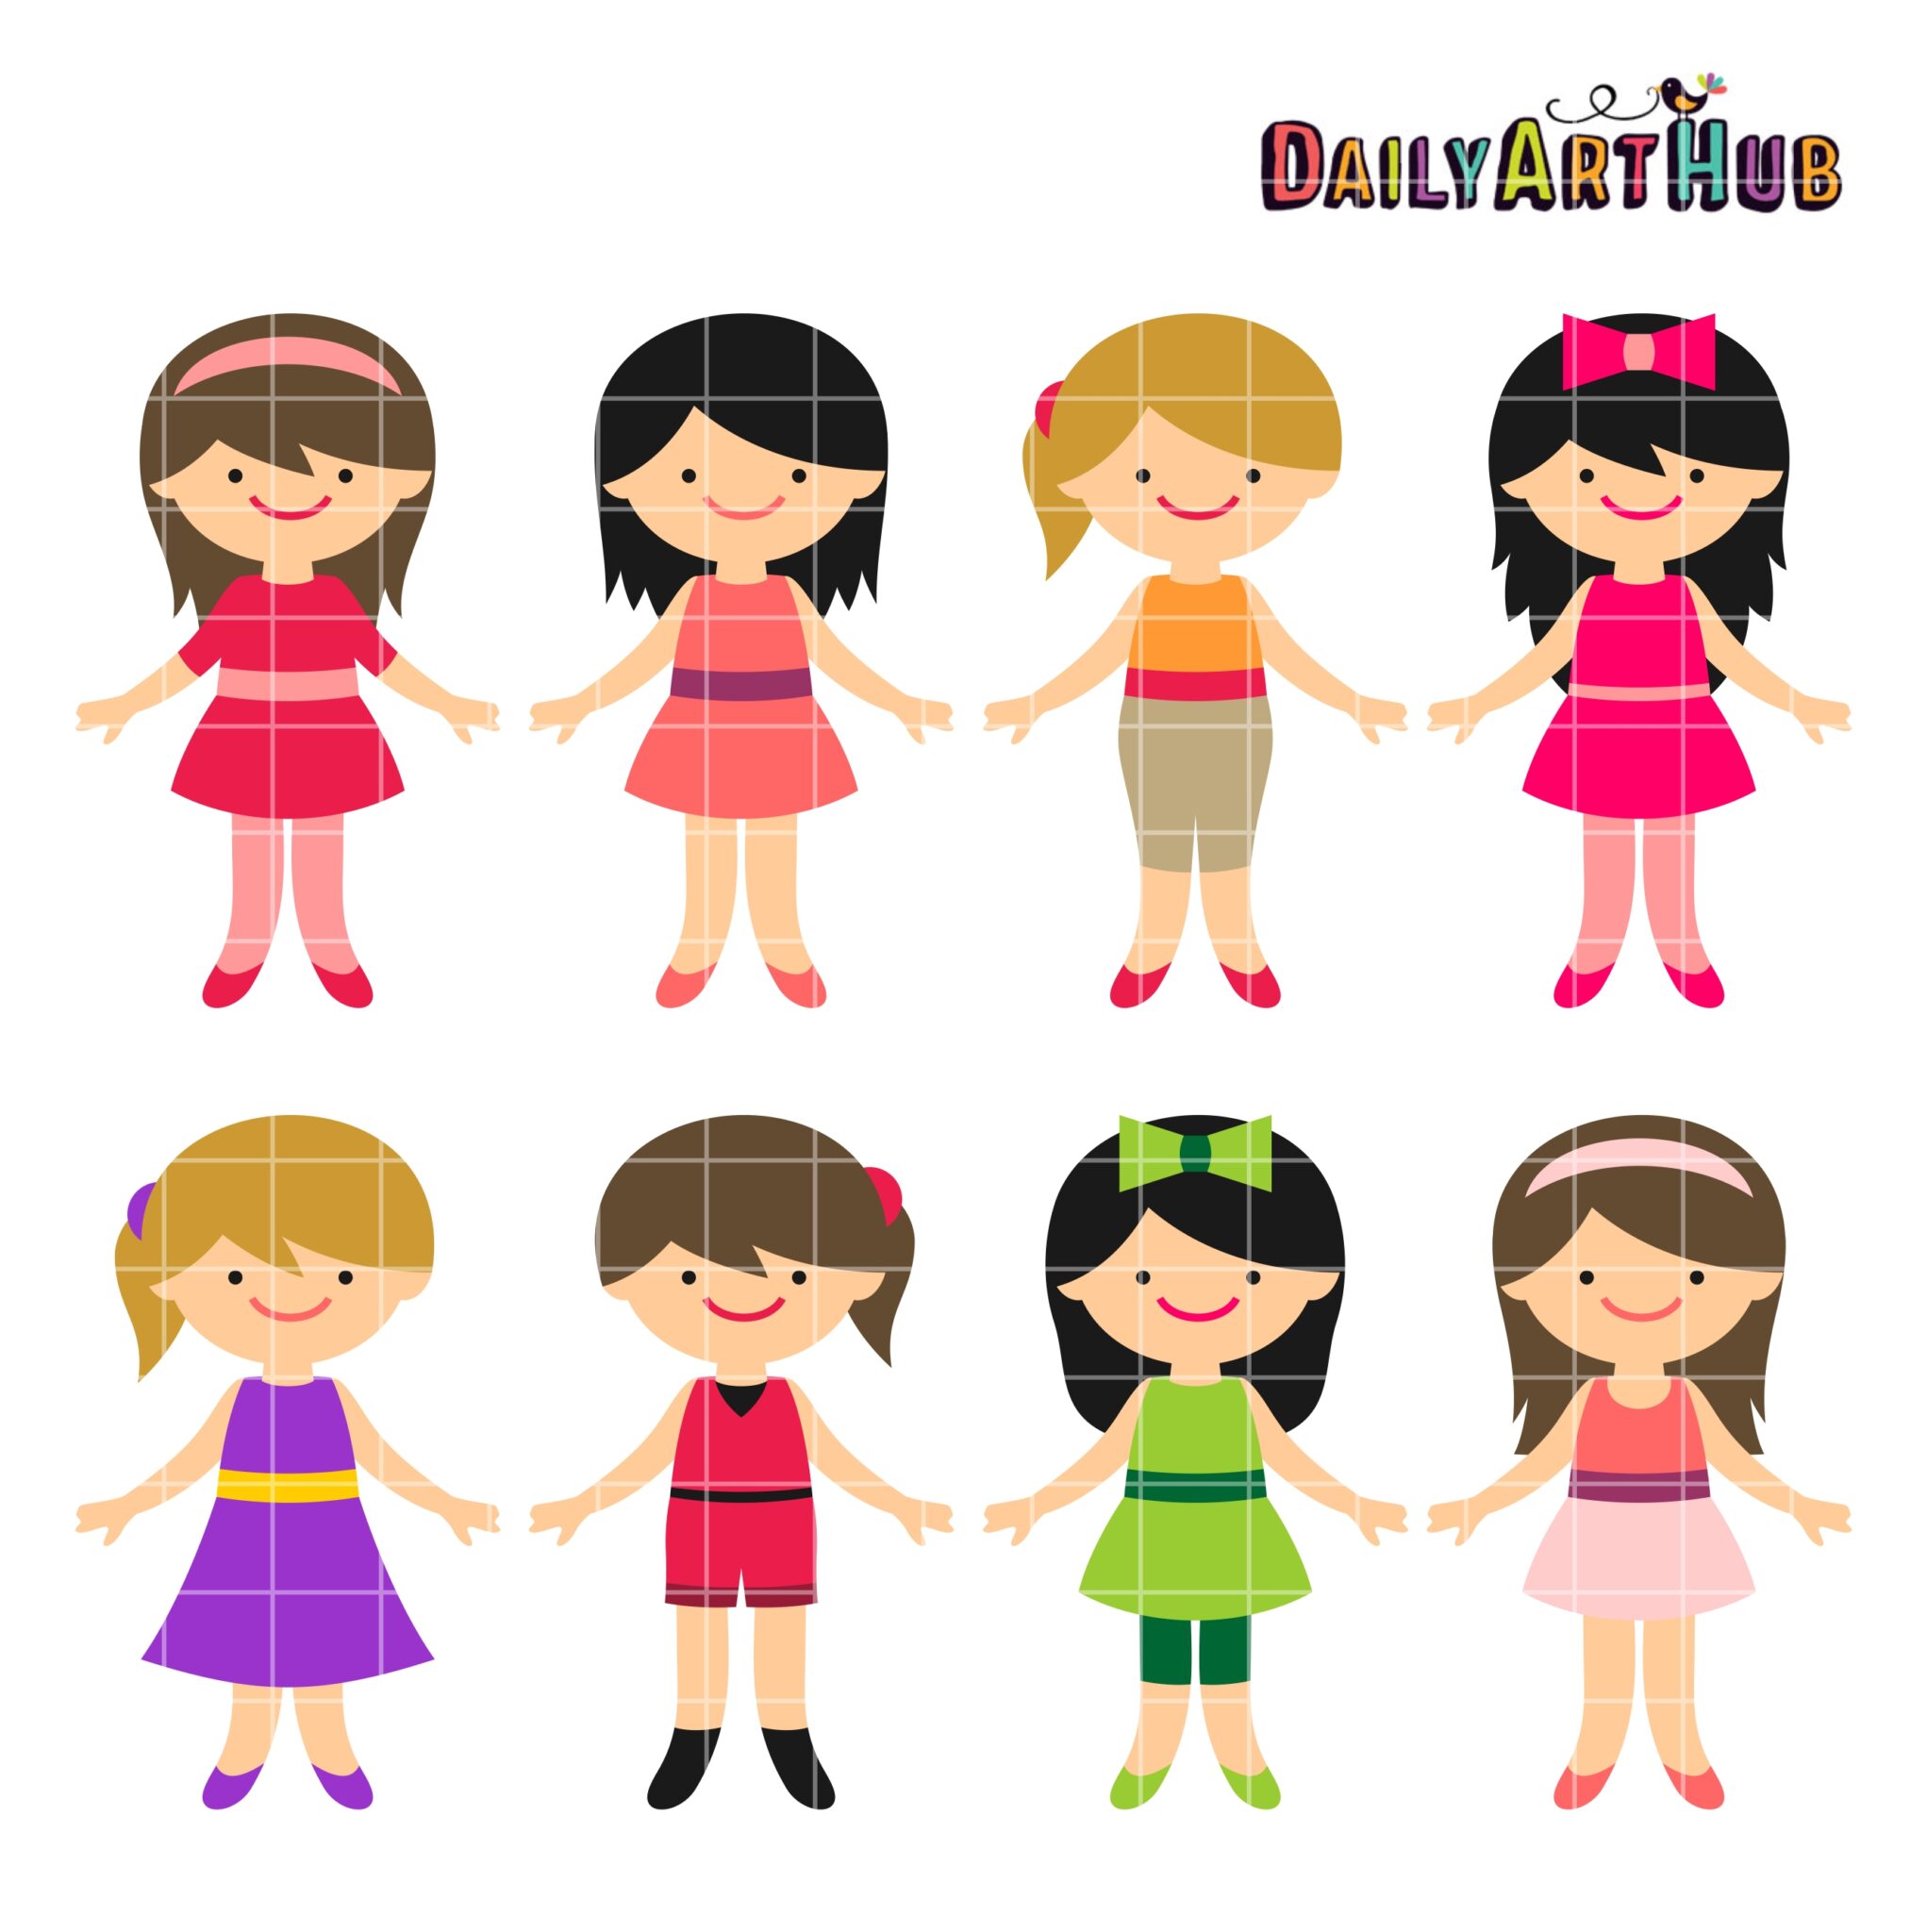 https://www.dailyarthub.com/wp-content/uploads/2015/07/Little-Girls-scaled.jpg